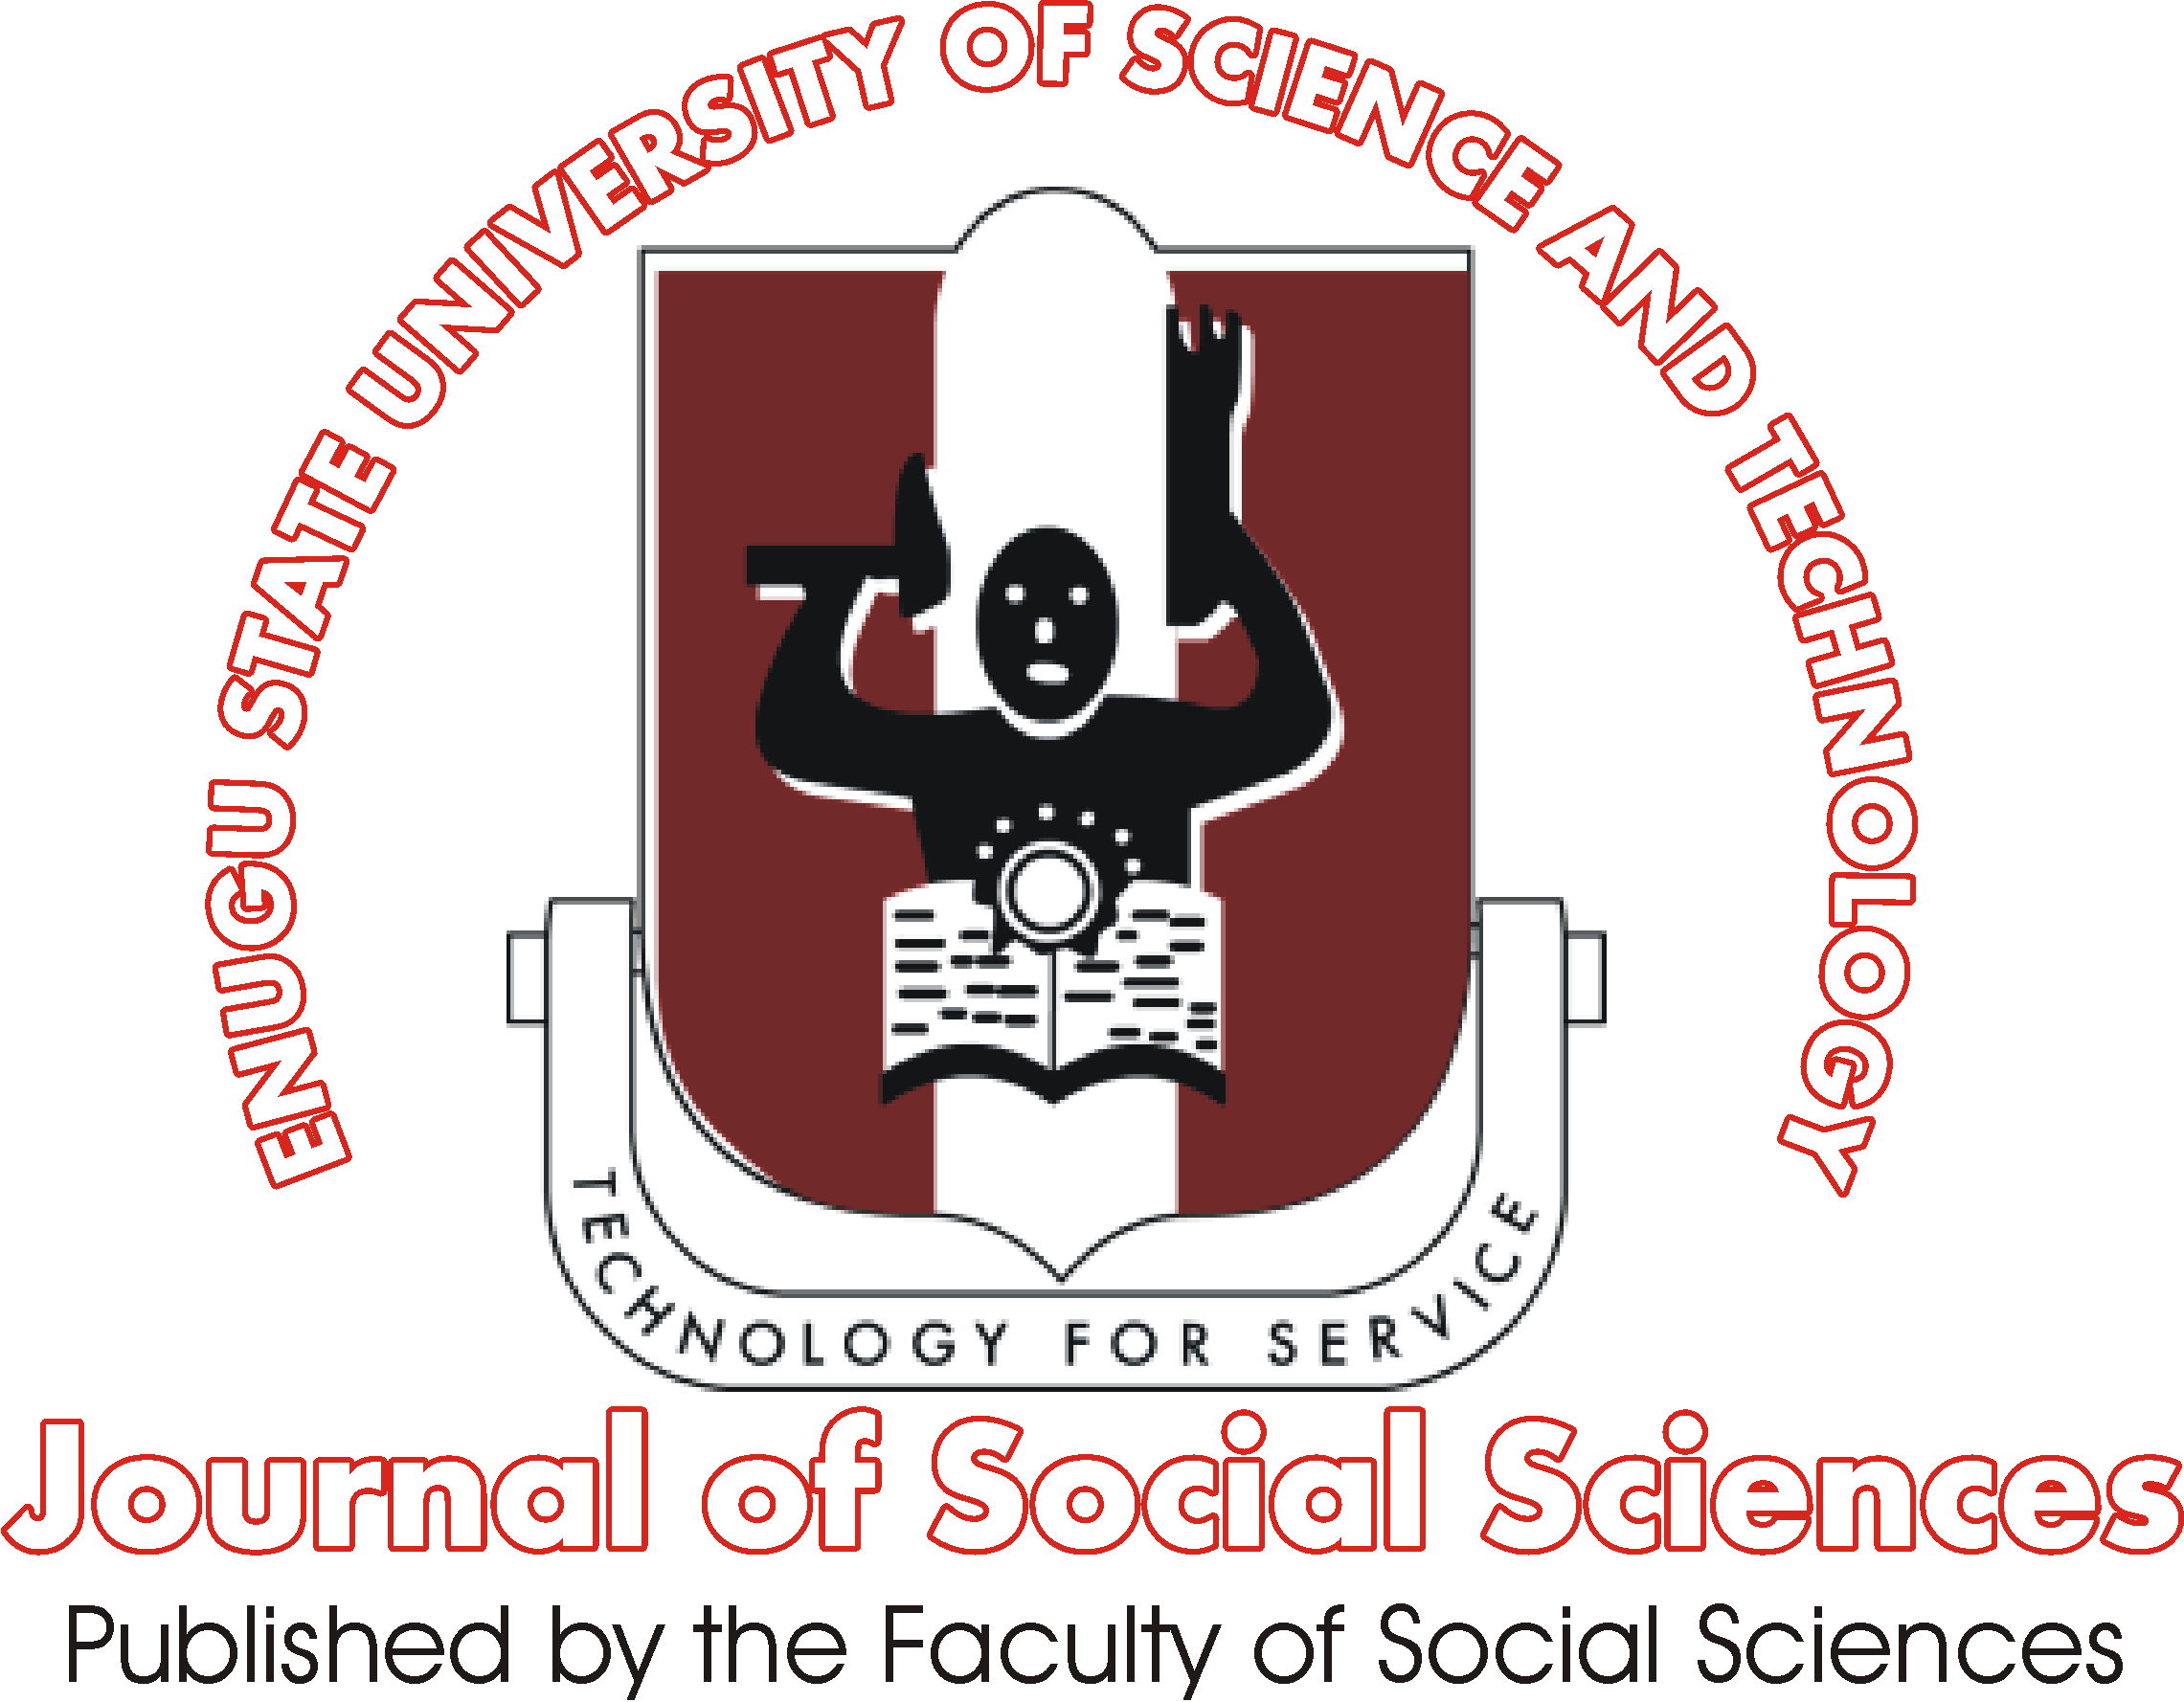 ESUT JOURNAL OF SOCIAL SCIENCES